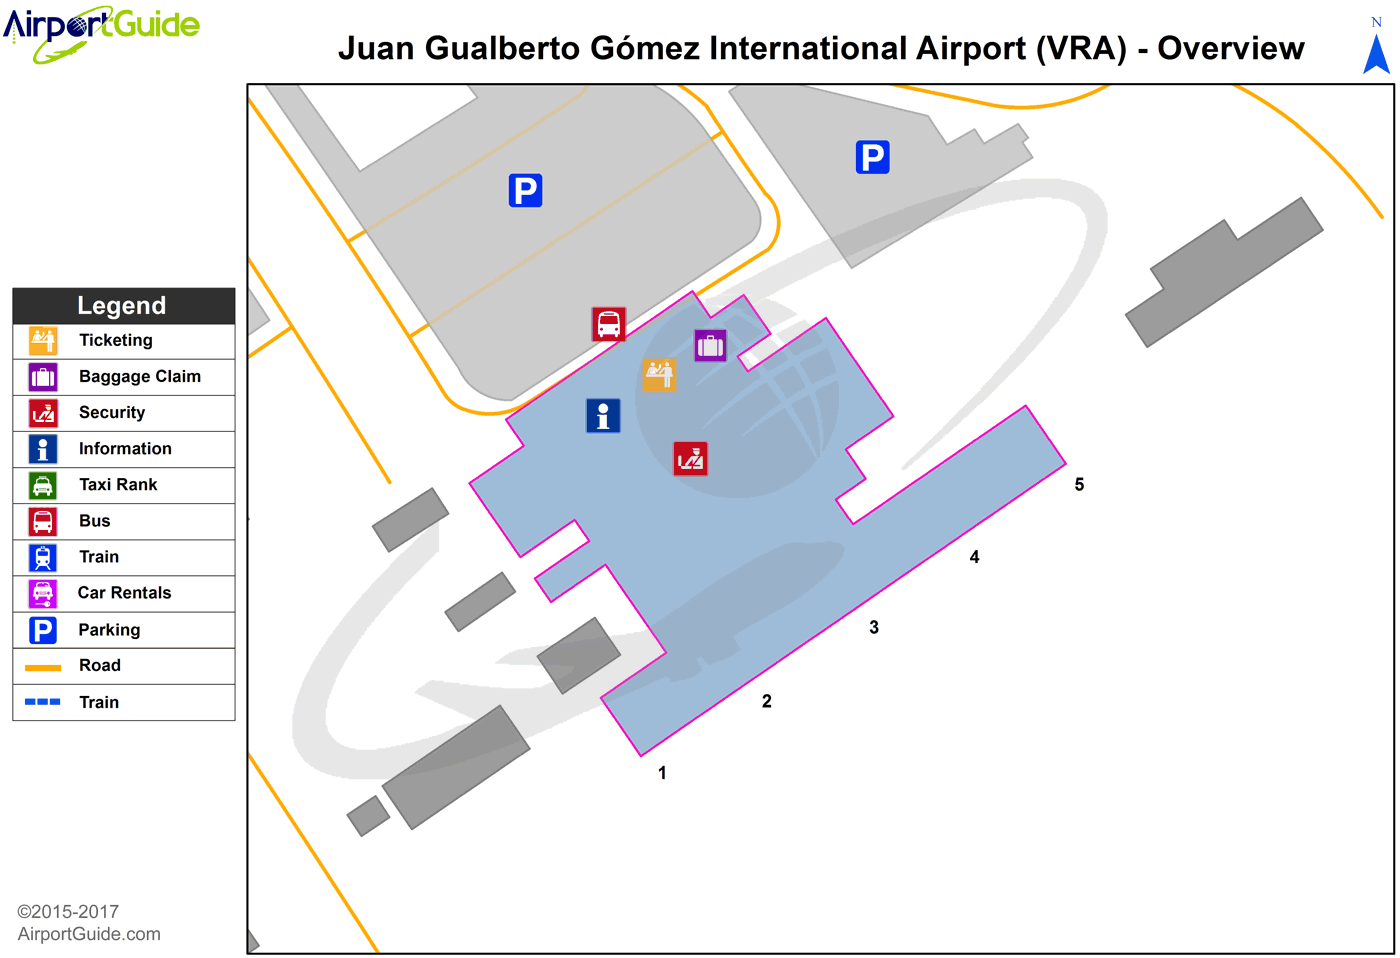 Varadero - Key West International (VRA) Airport Terminal Map - Overview